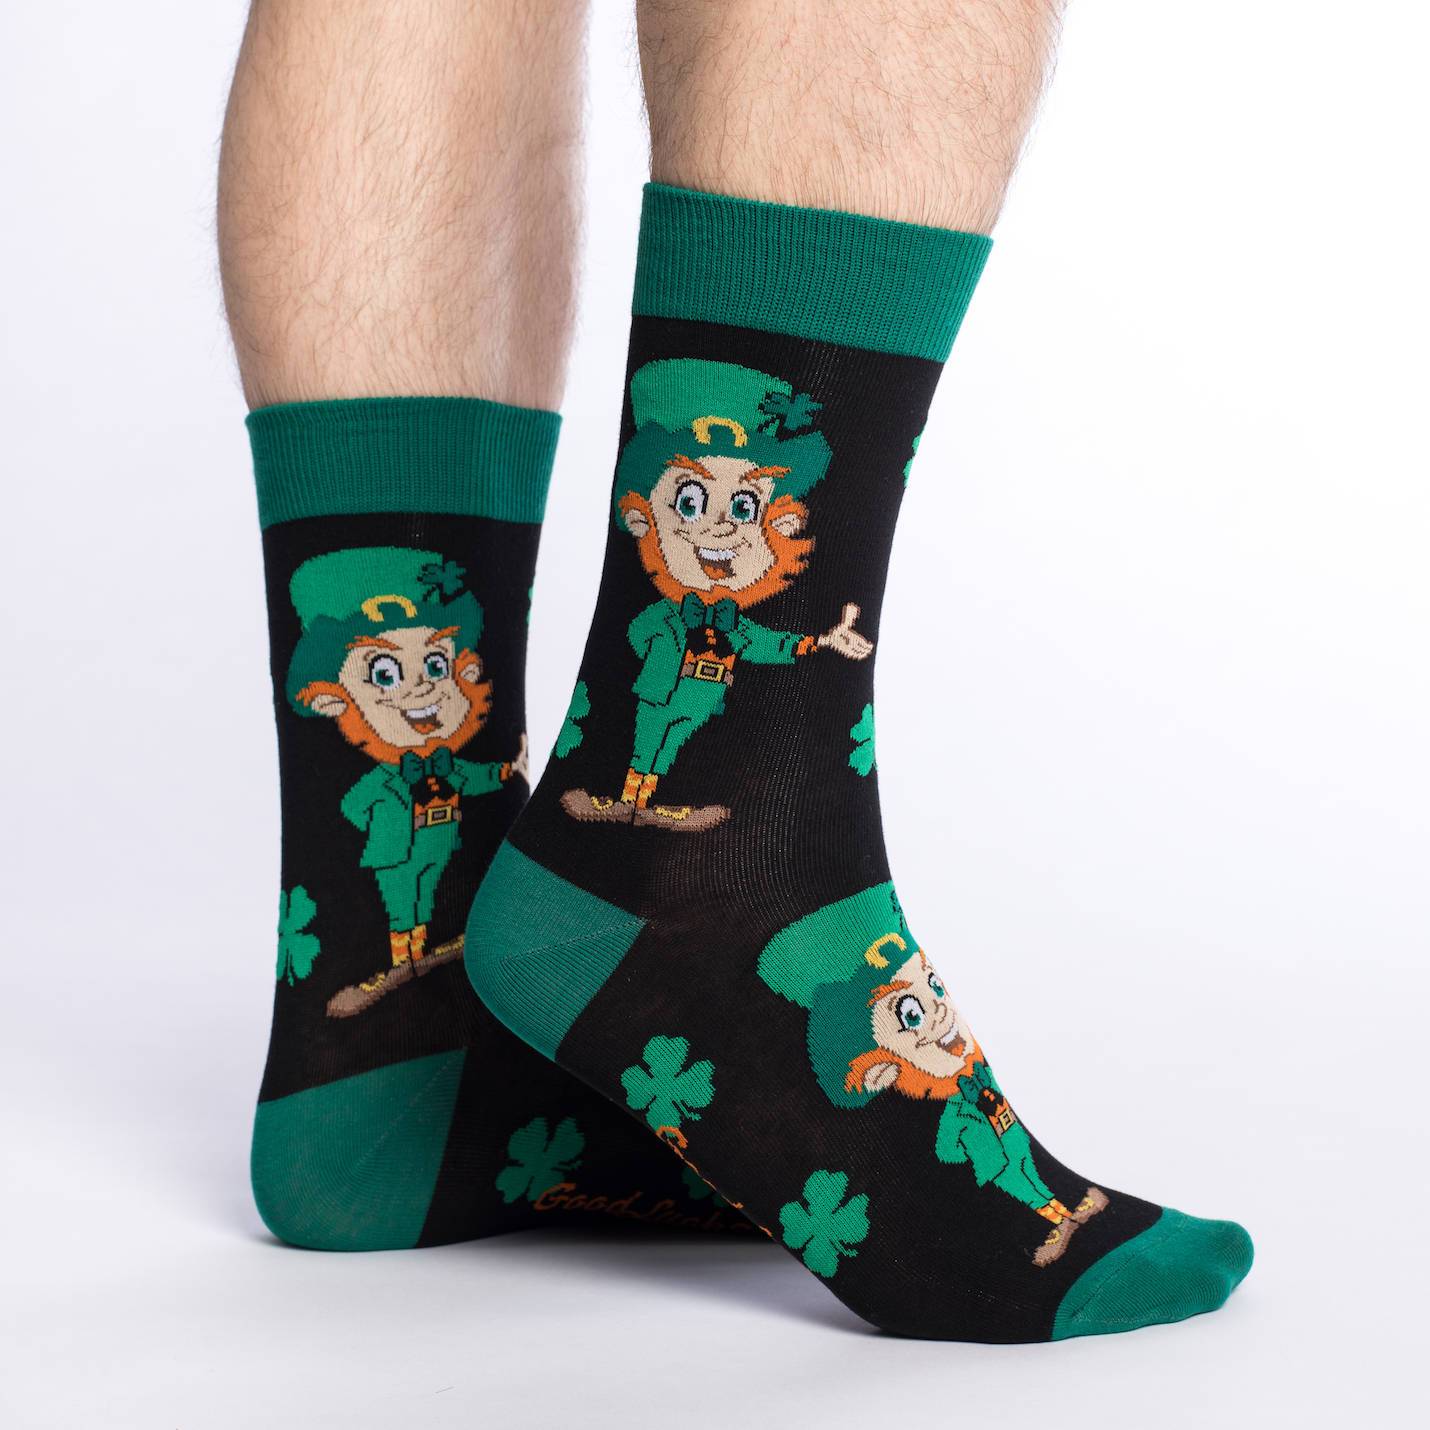 St. Patrick's Day Socks – Good Luck Sock